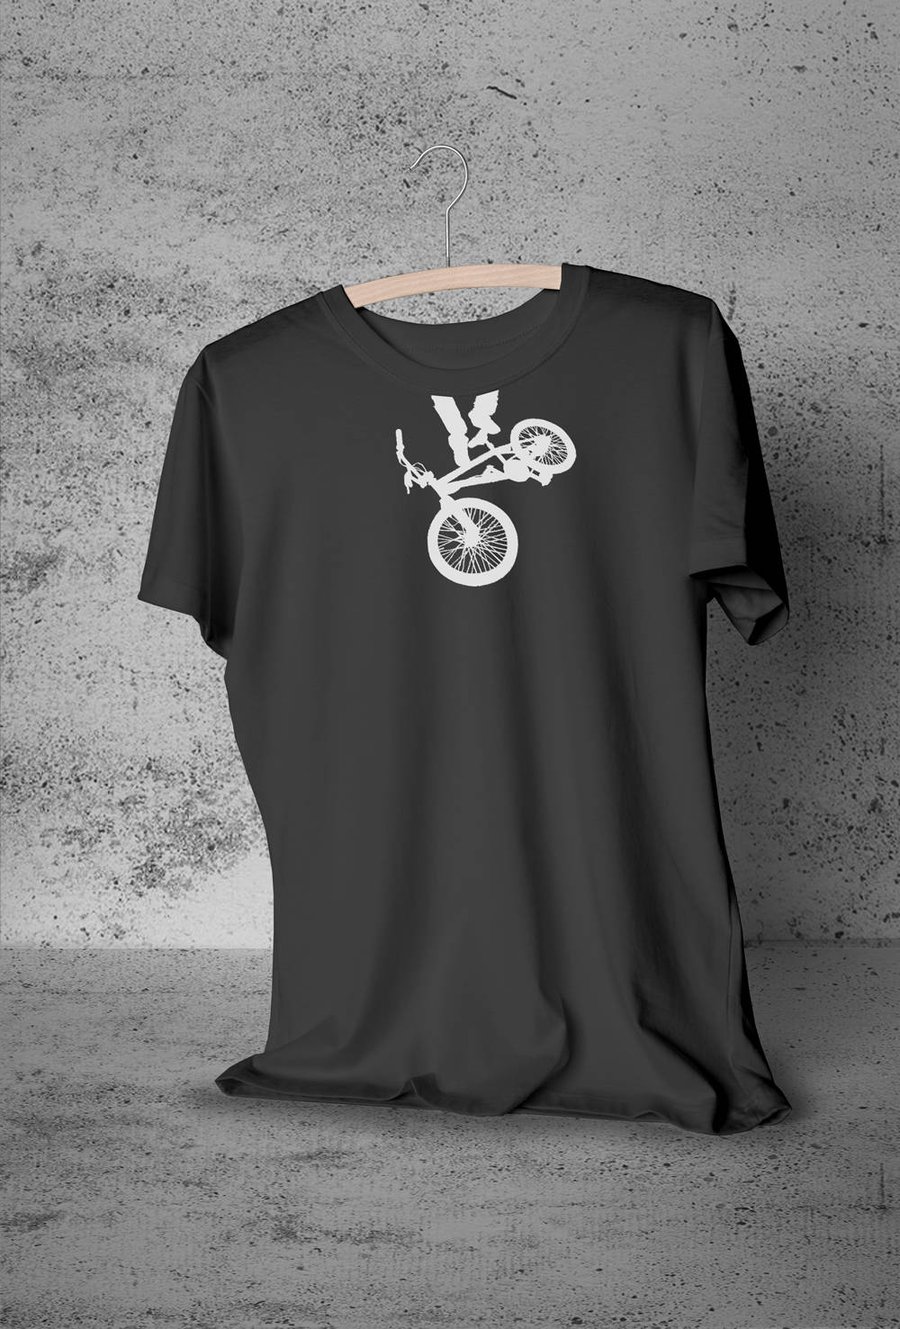 Men graphic BMX Tshirt, male bike lover tee, Small-XL, 6 colours shirts! 